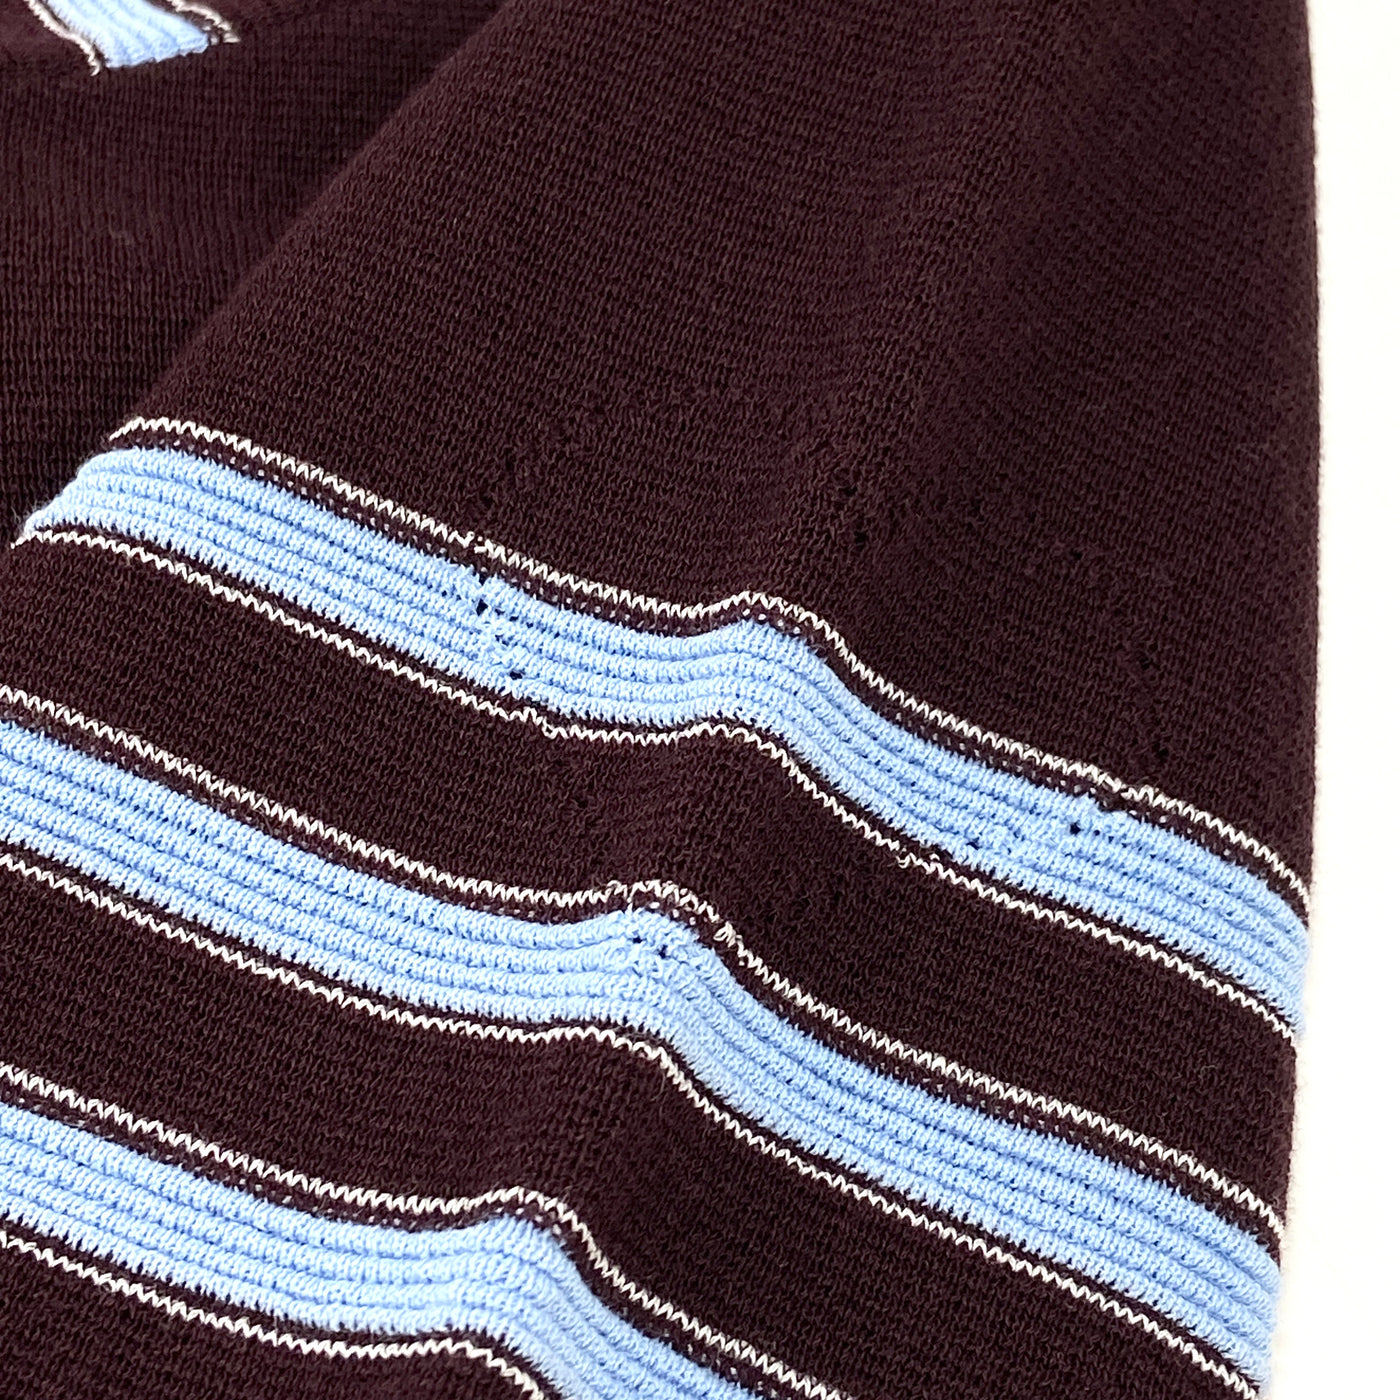 2023SS cotton nylon striped knit NKNIT23SS-0250 0